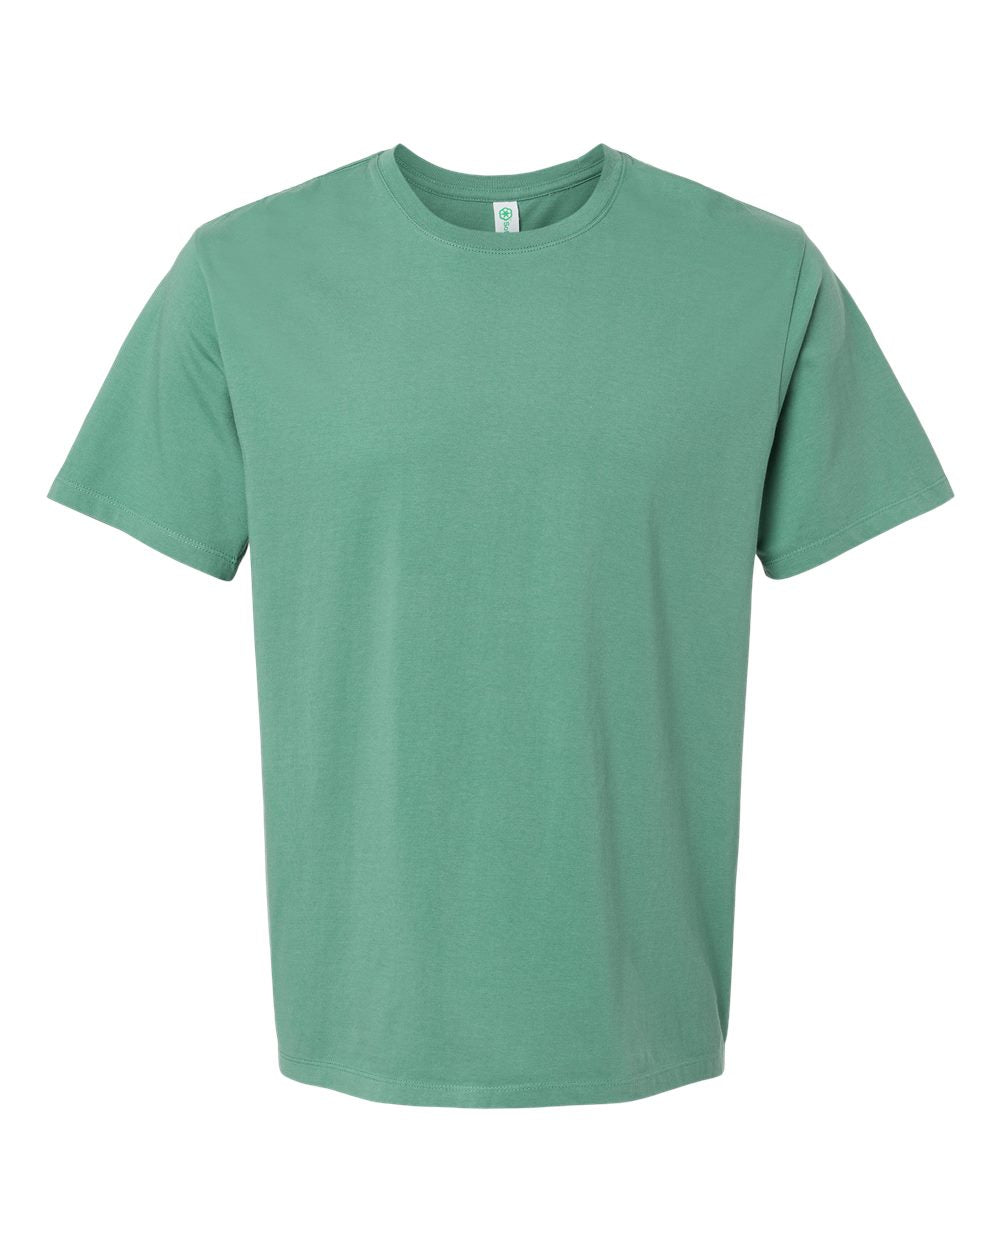 Softshirts® Unisex Organic Cotton T-shirt in green